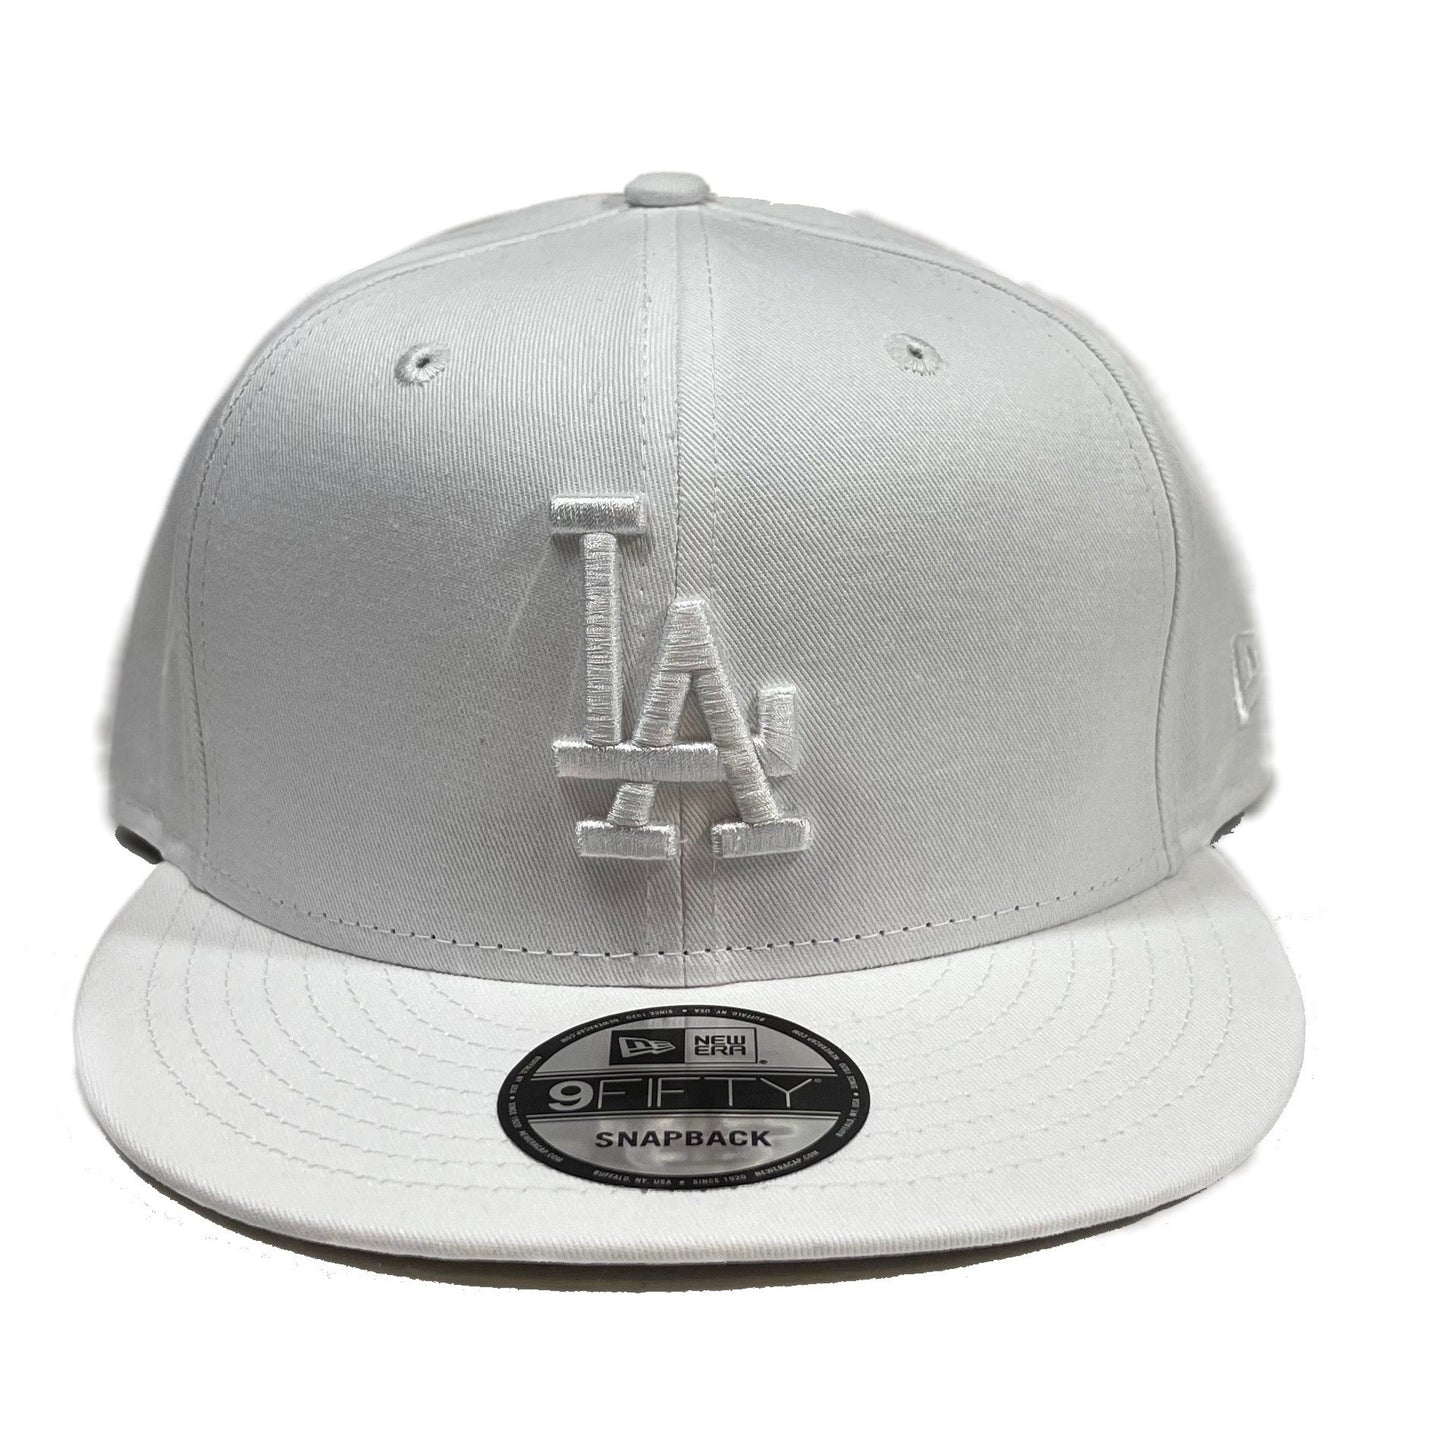 Los Angeles Dodgers (White) Snapback